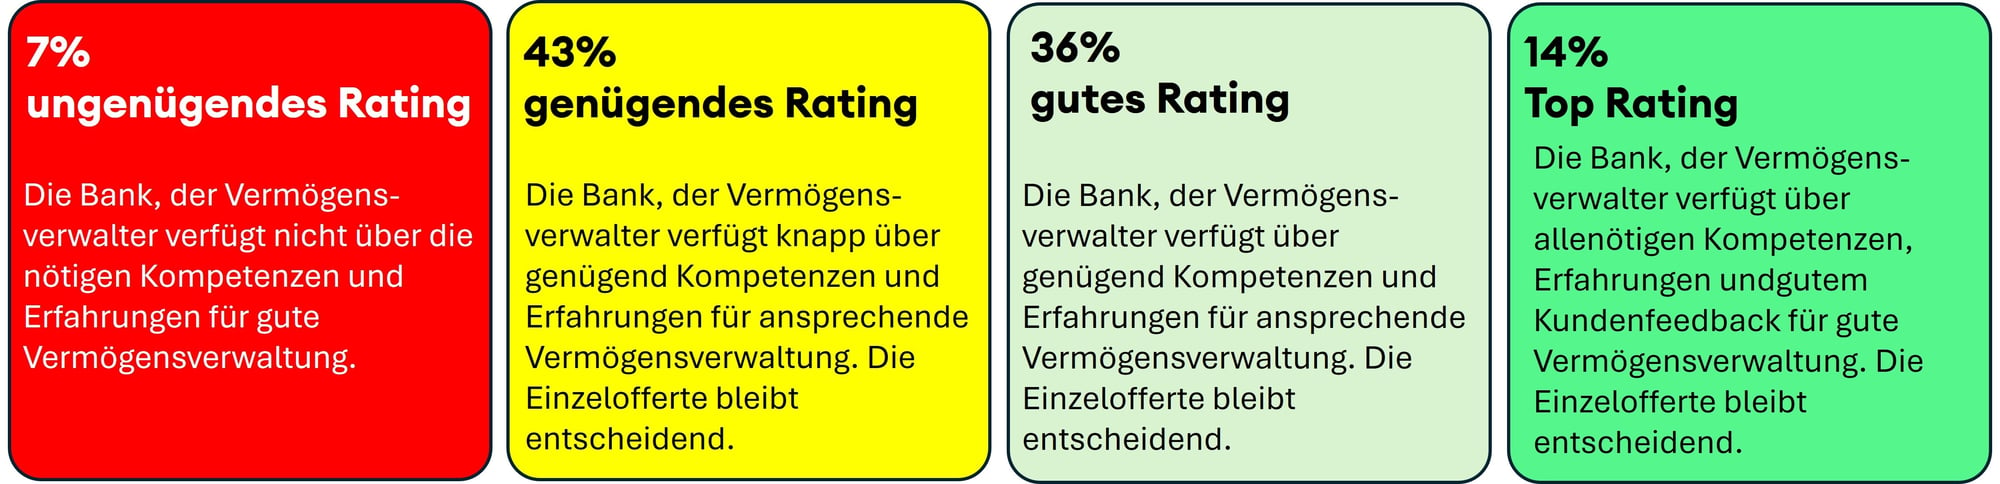 Provider-Rating-Uebersicht-2